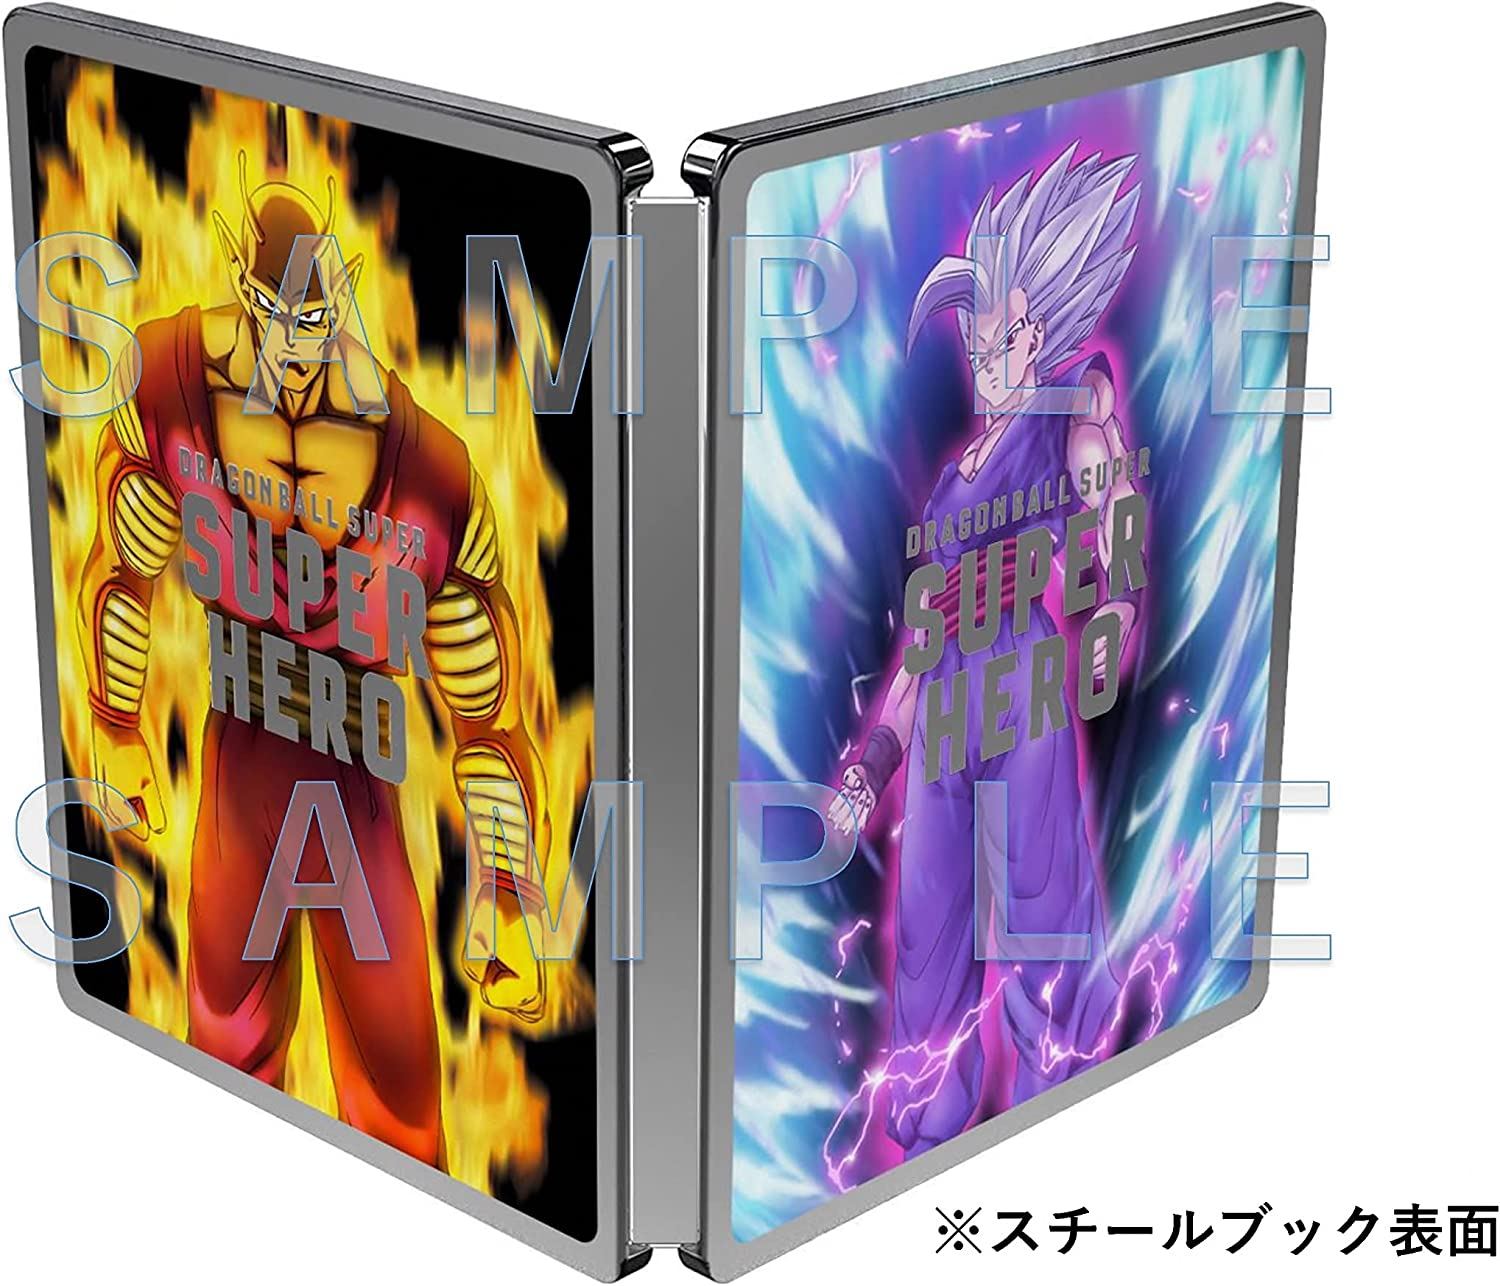 Dragon Ball Super - Super Hero 4K Ultra HD Blu-ray & Blu-ray Steel